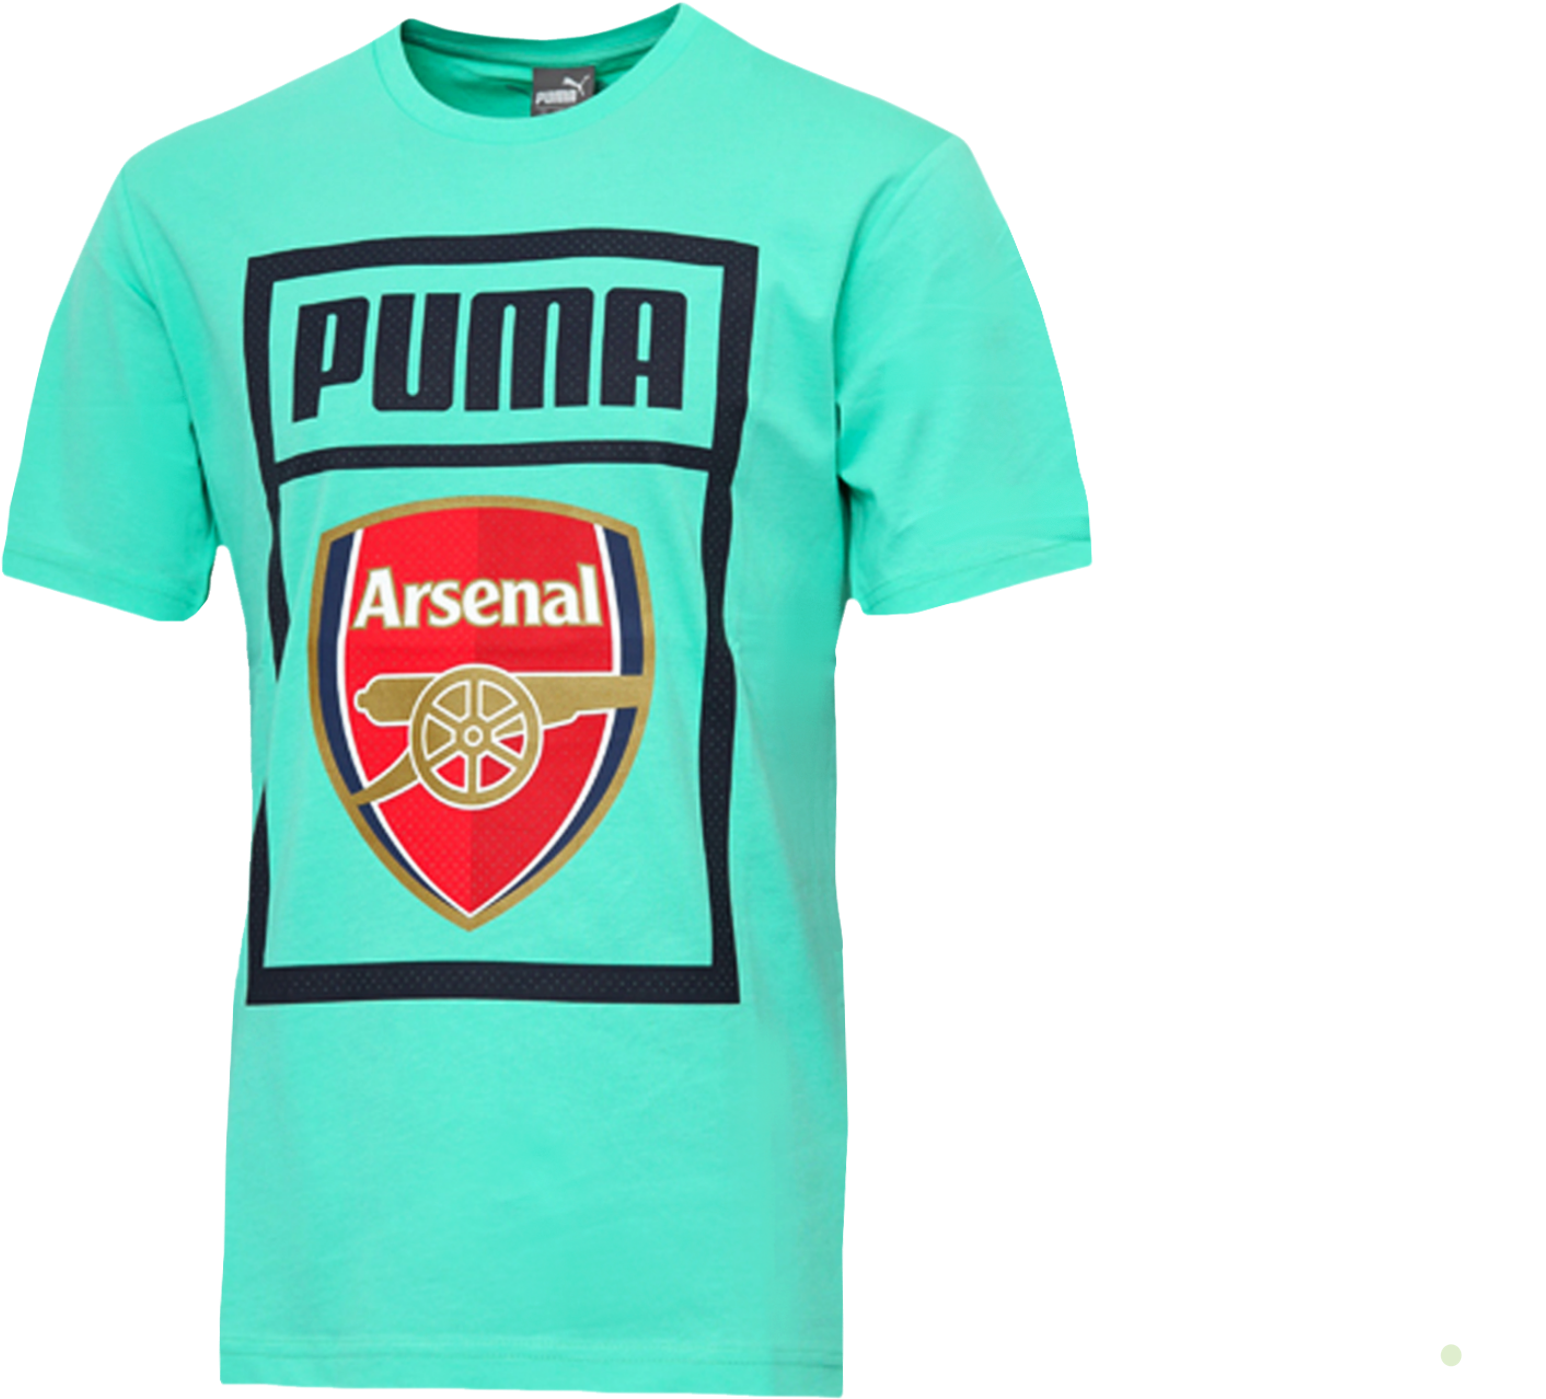 Arsenal Puma T Shirt Design PNG